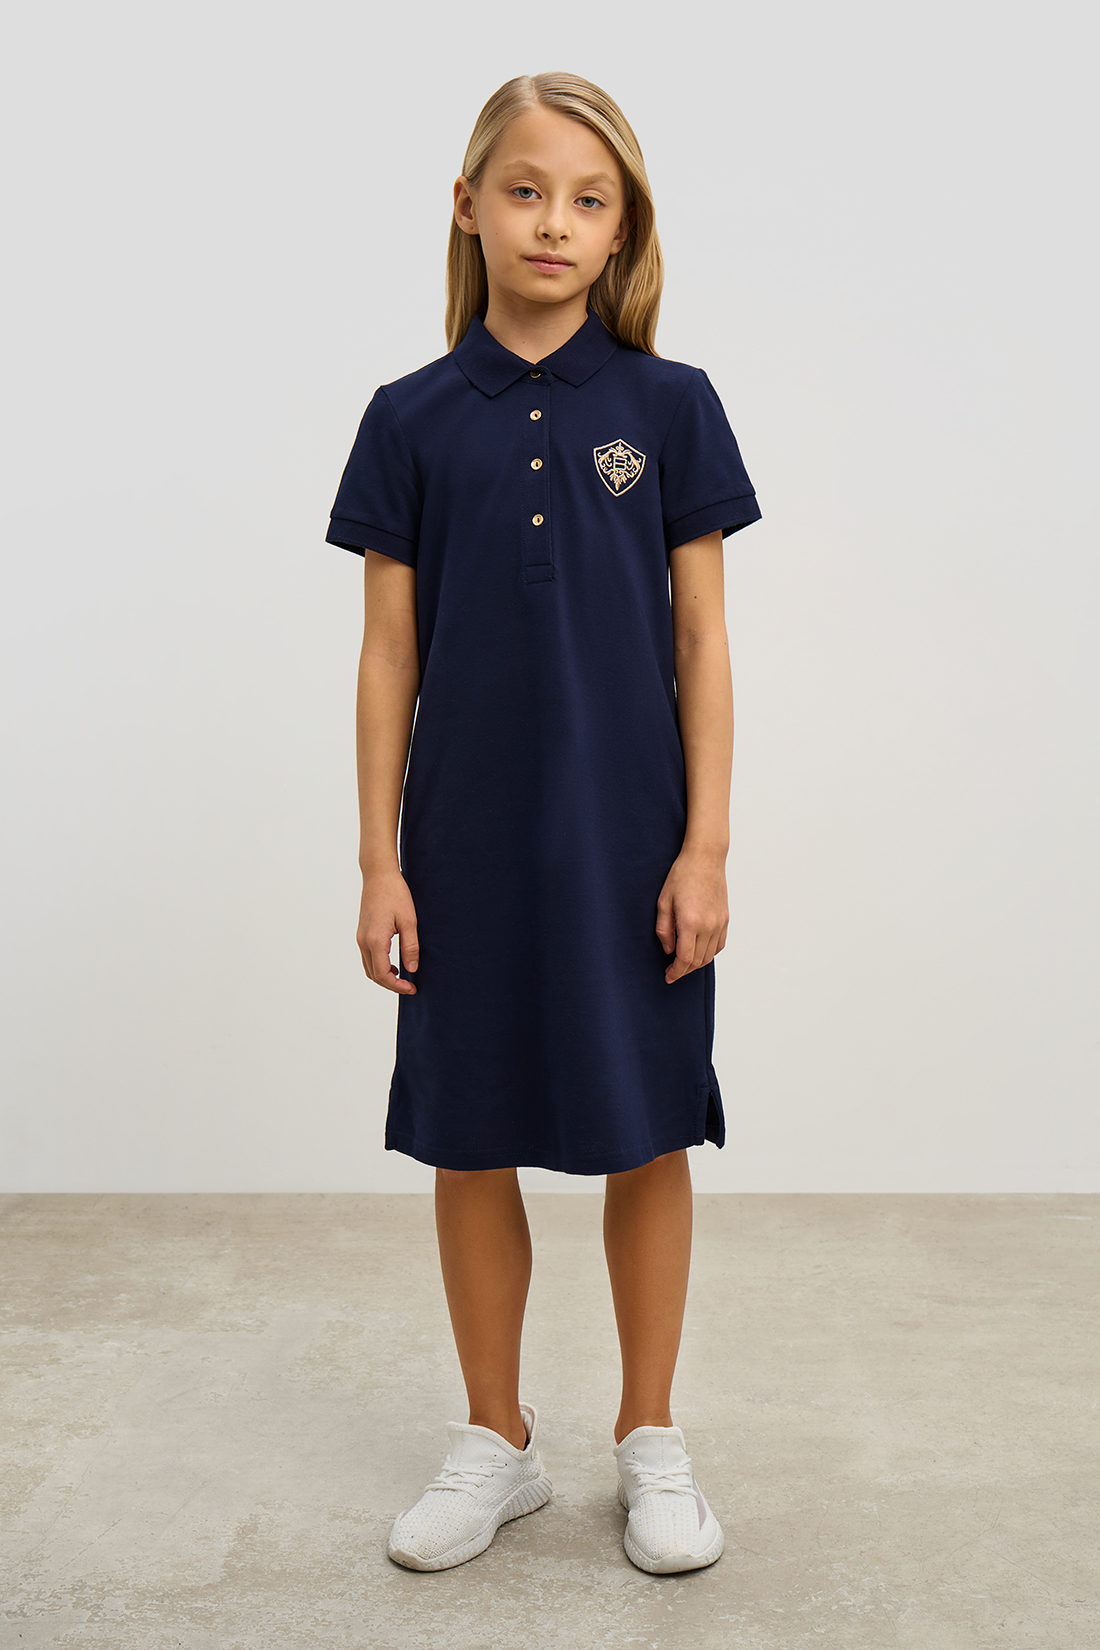 Платье-поло для девочки (арт. baon BK451201), размер 122, цвет синий Платье-поло для девочки (арт. baon BK451201) - фото 1